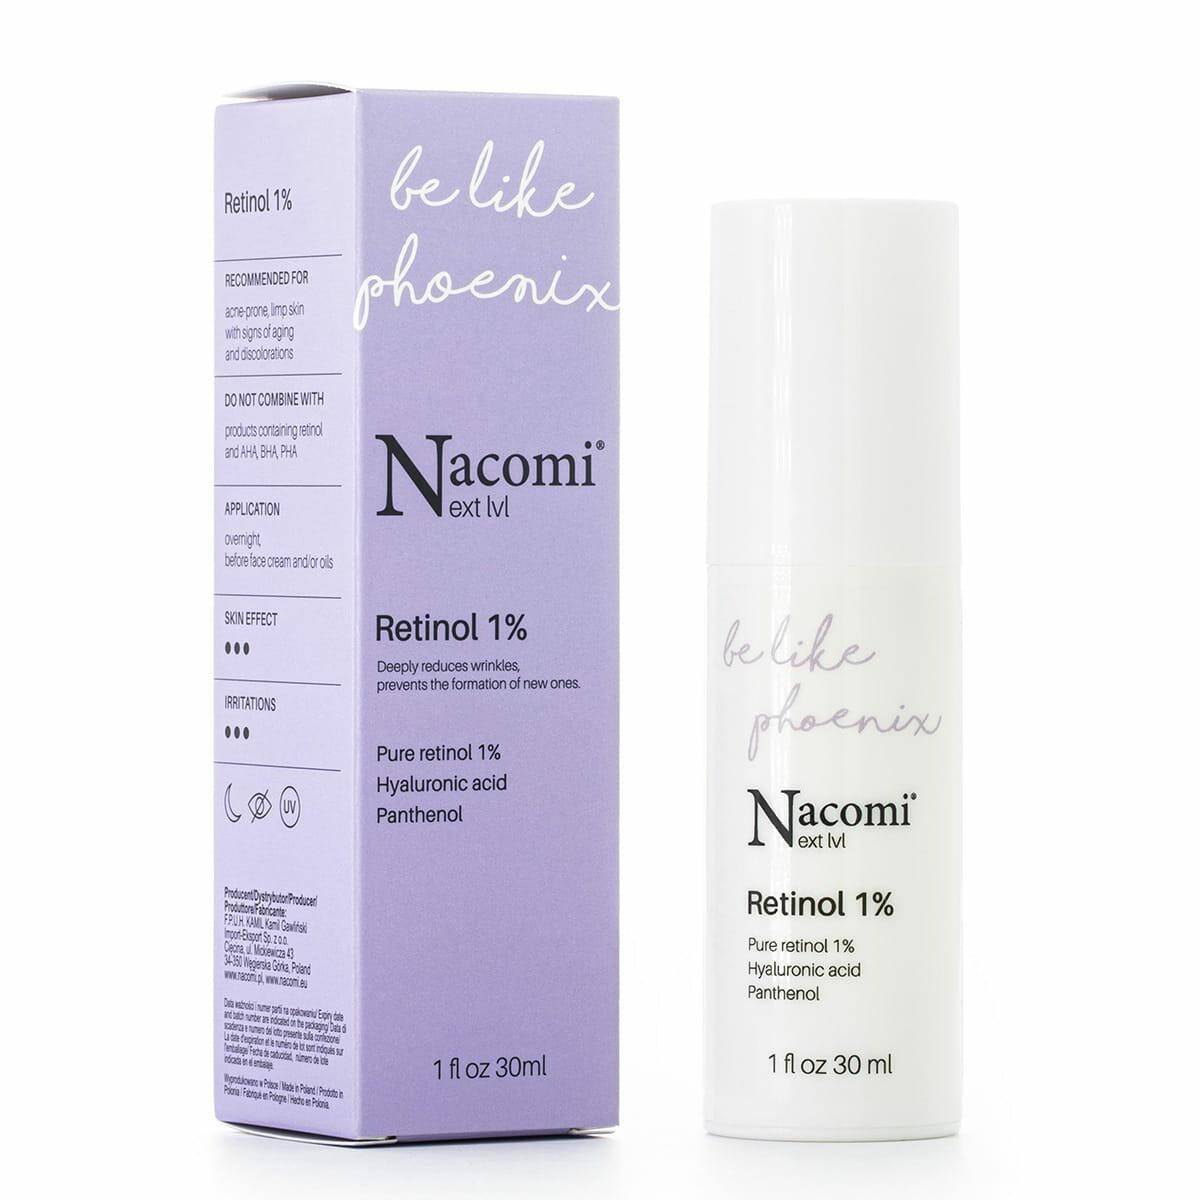 Nacomi next lvl serum Retinol 1% 30ml